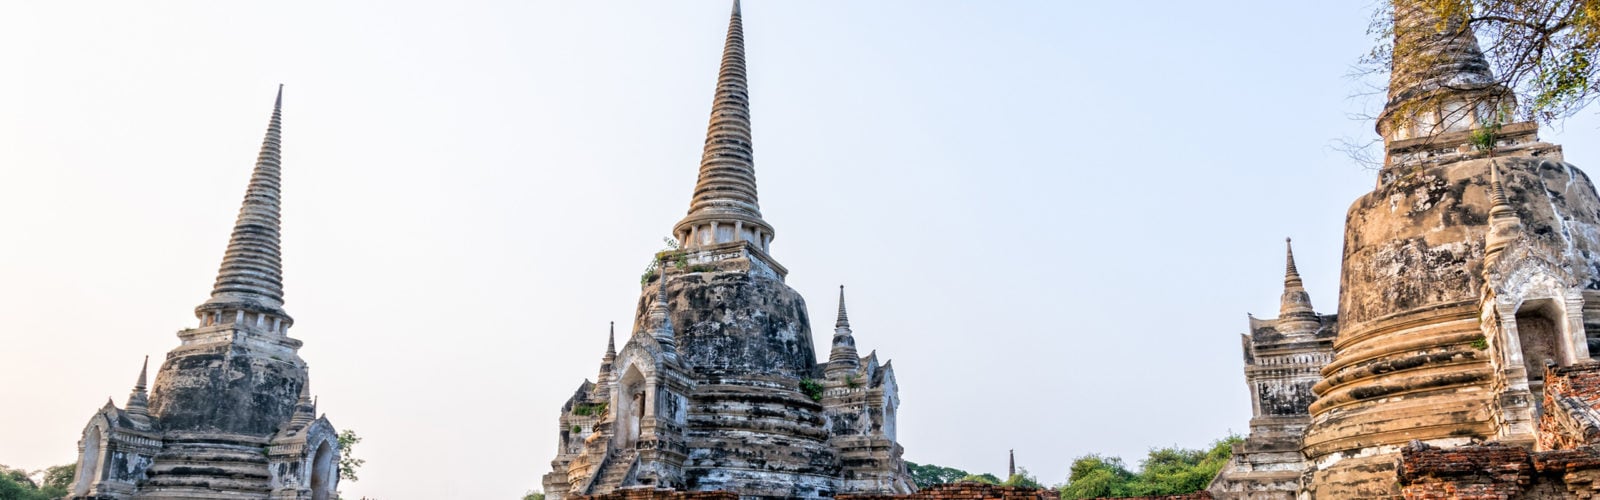 Wat Phra Si Sanphet, Thailand